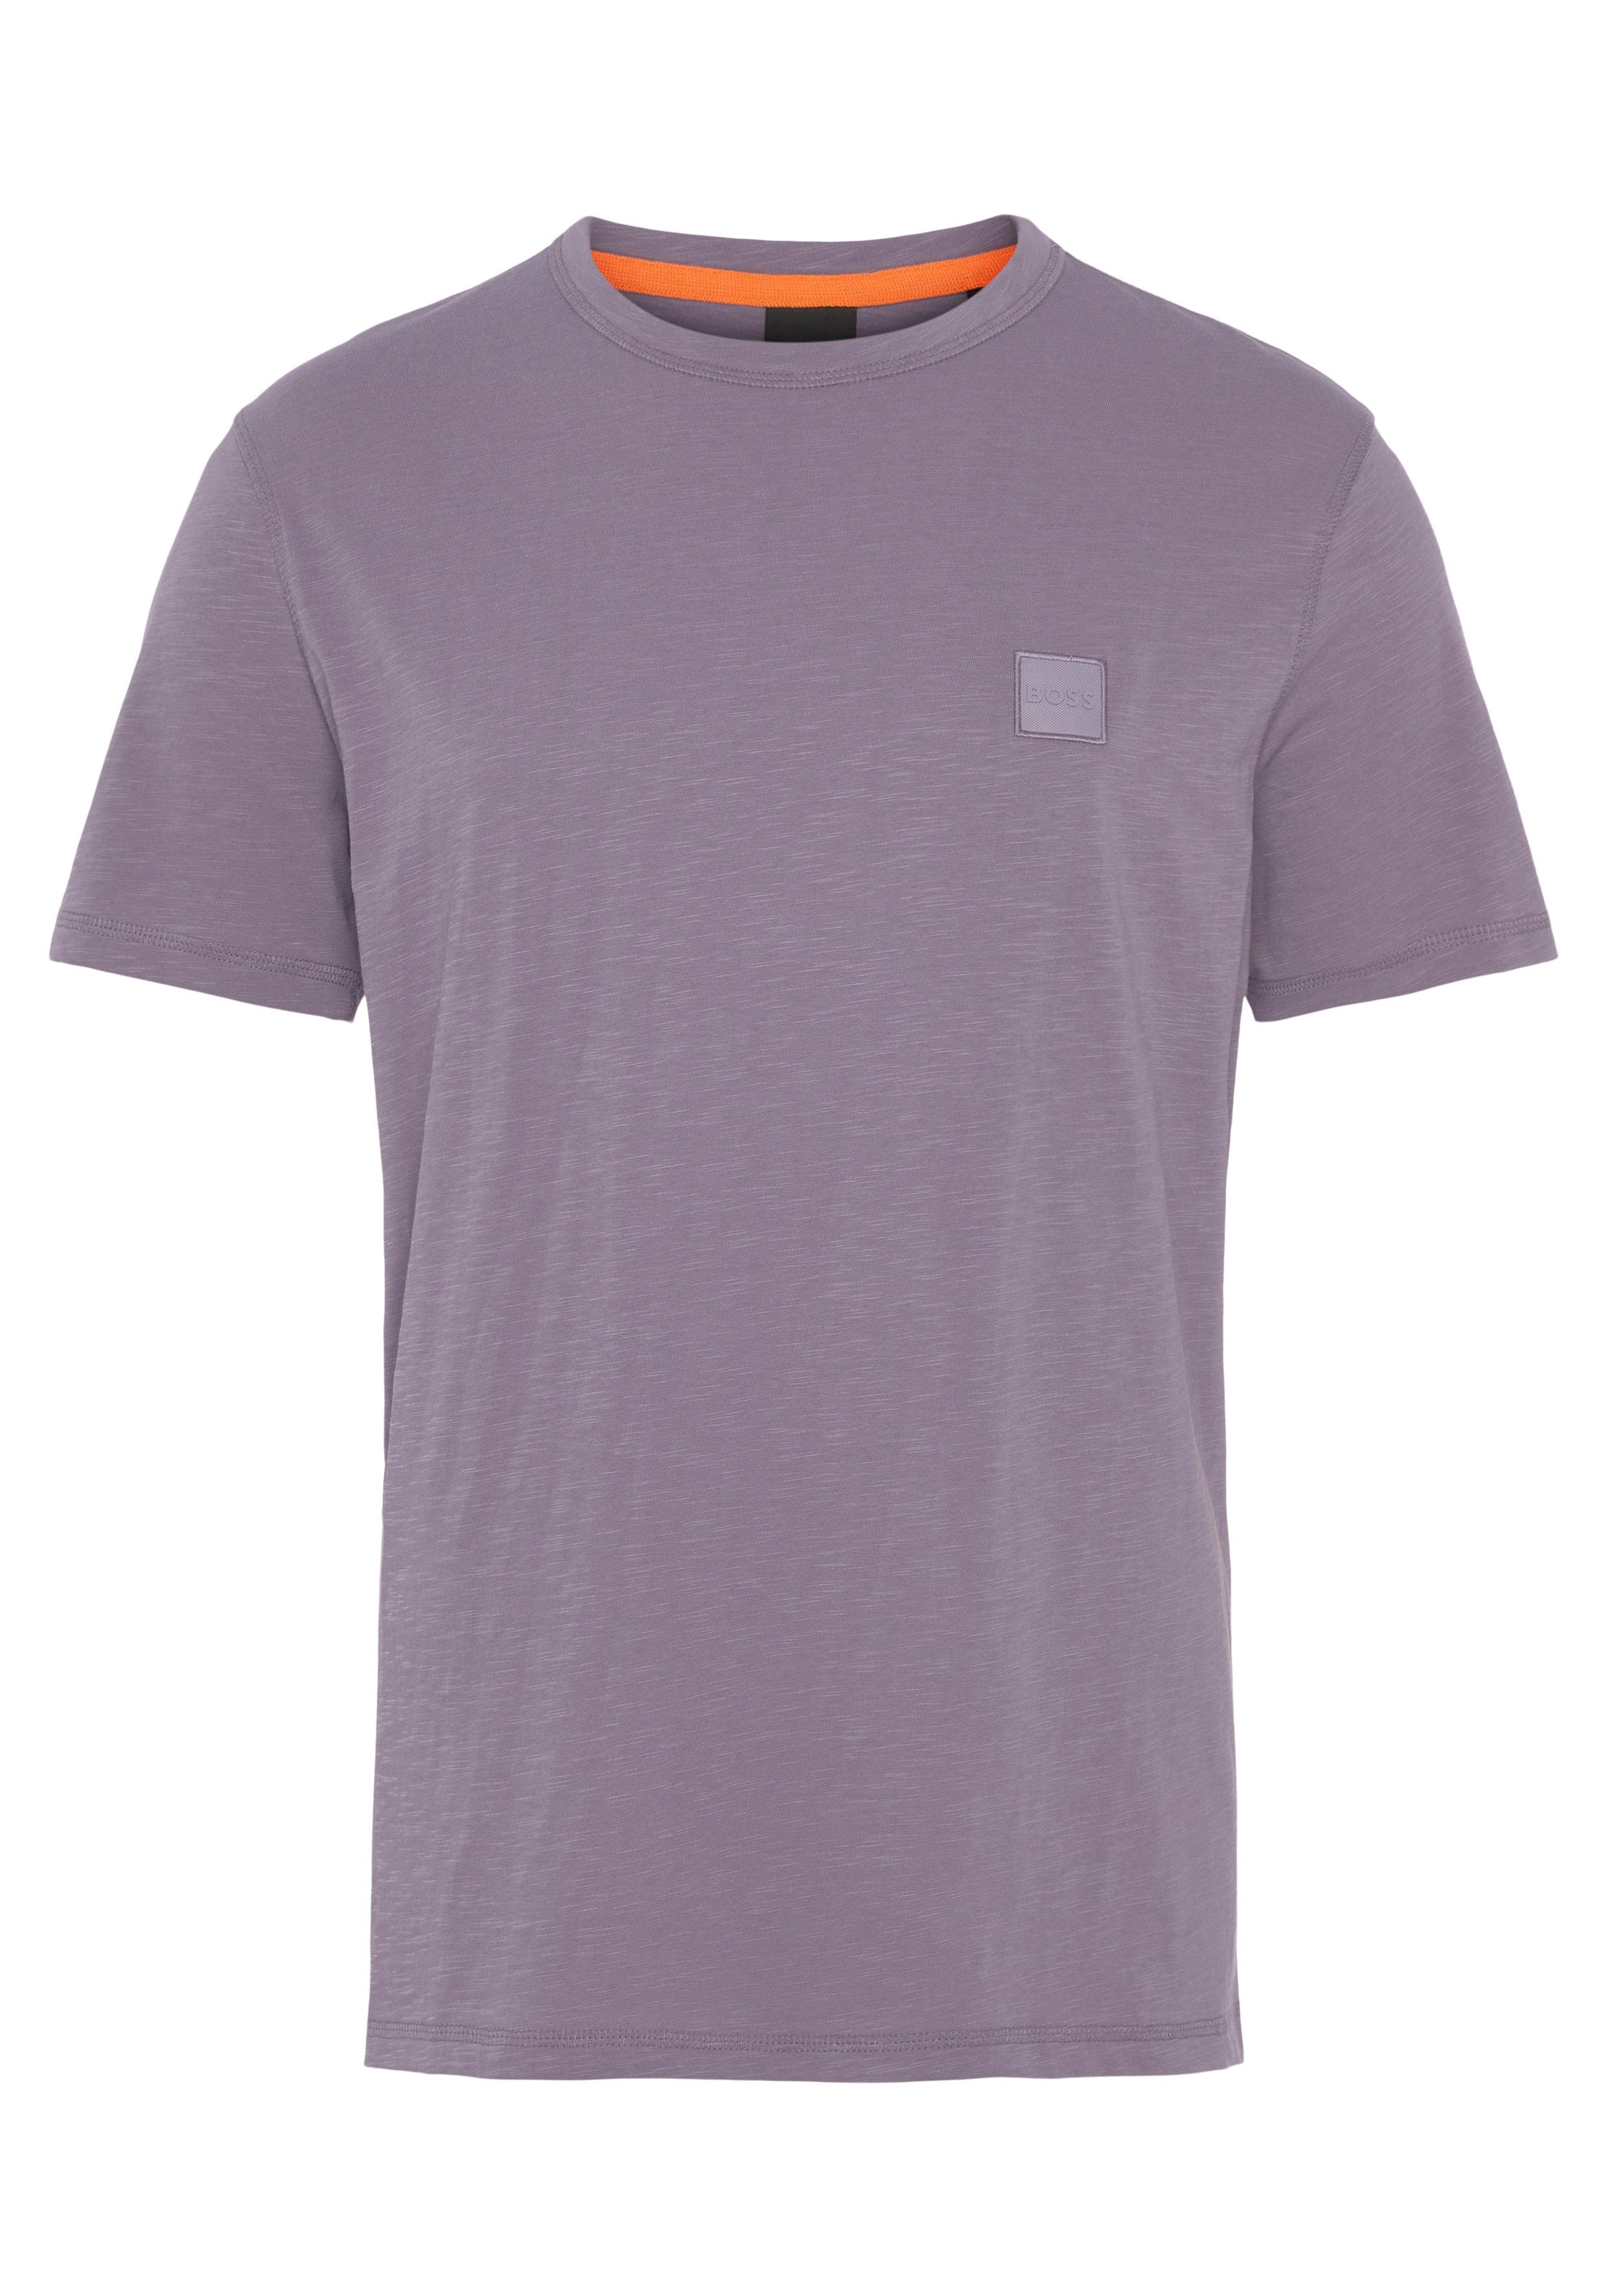 BOSS ORANGE T-Shirt Tegood mit BOSS Logo auf der Brust Medium Purple511